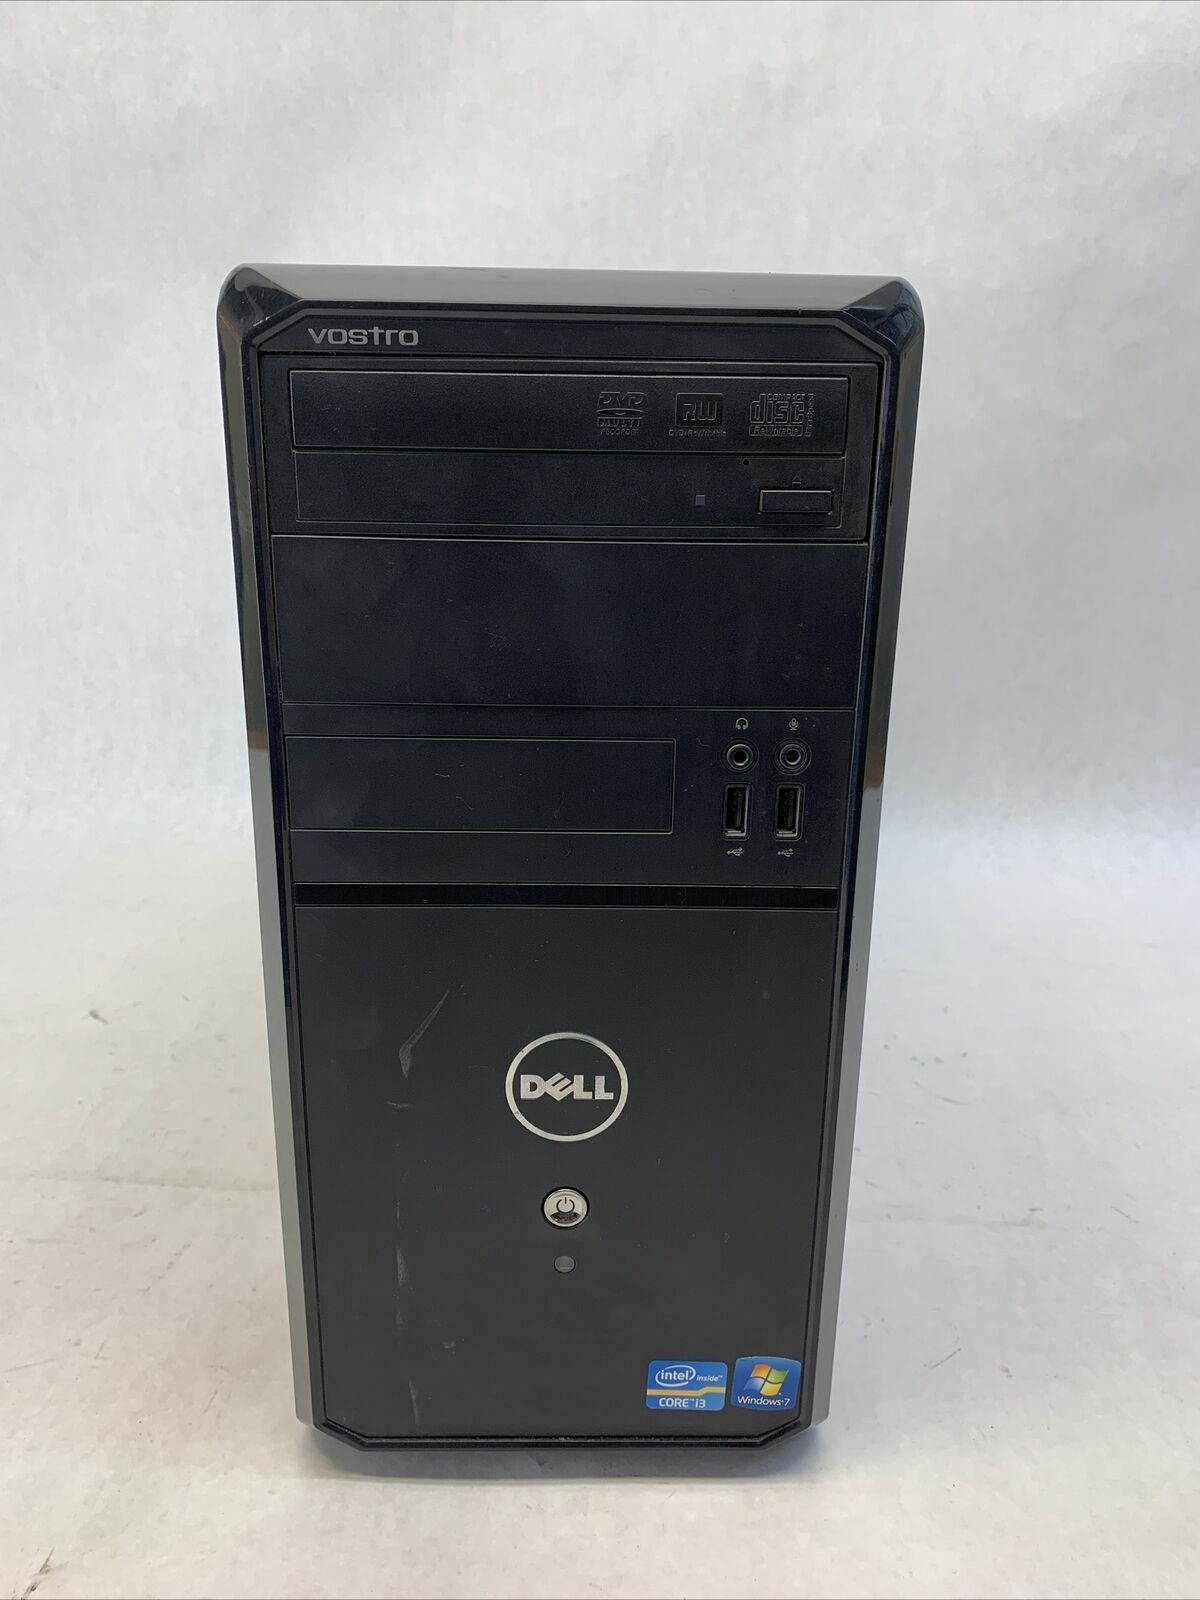 Dell Vostro 260 MT Intel Core i3-2120 3.3GHz 4GB RAM No HDD No OS